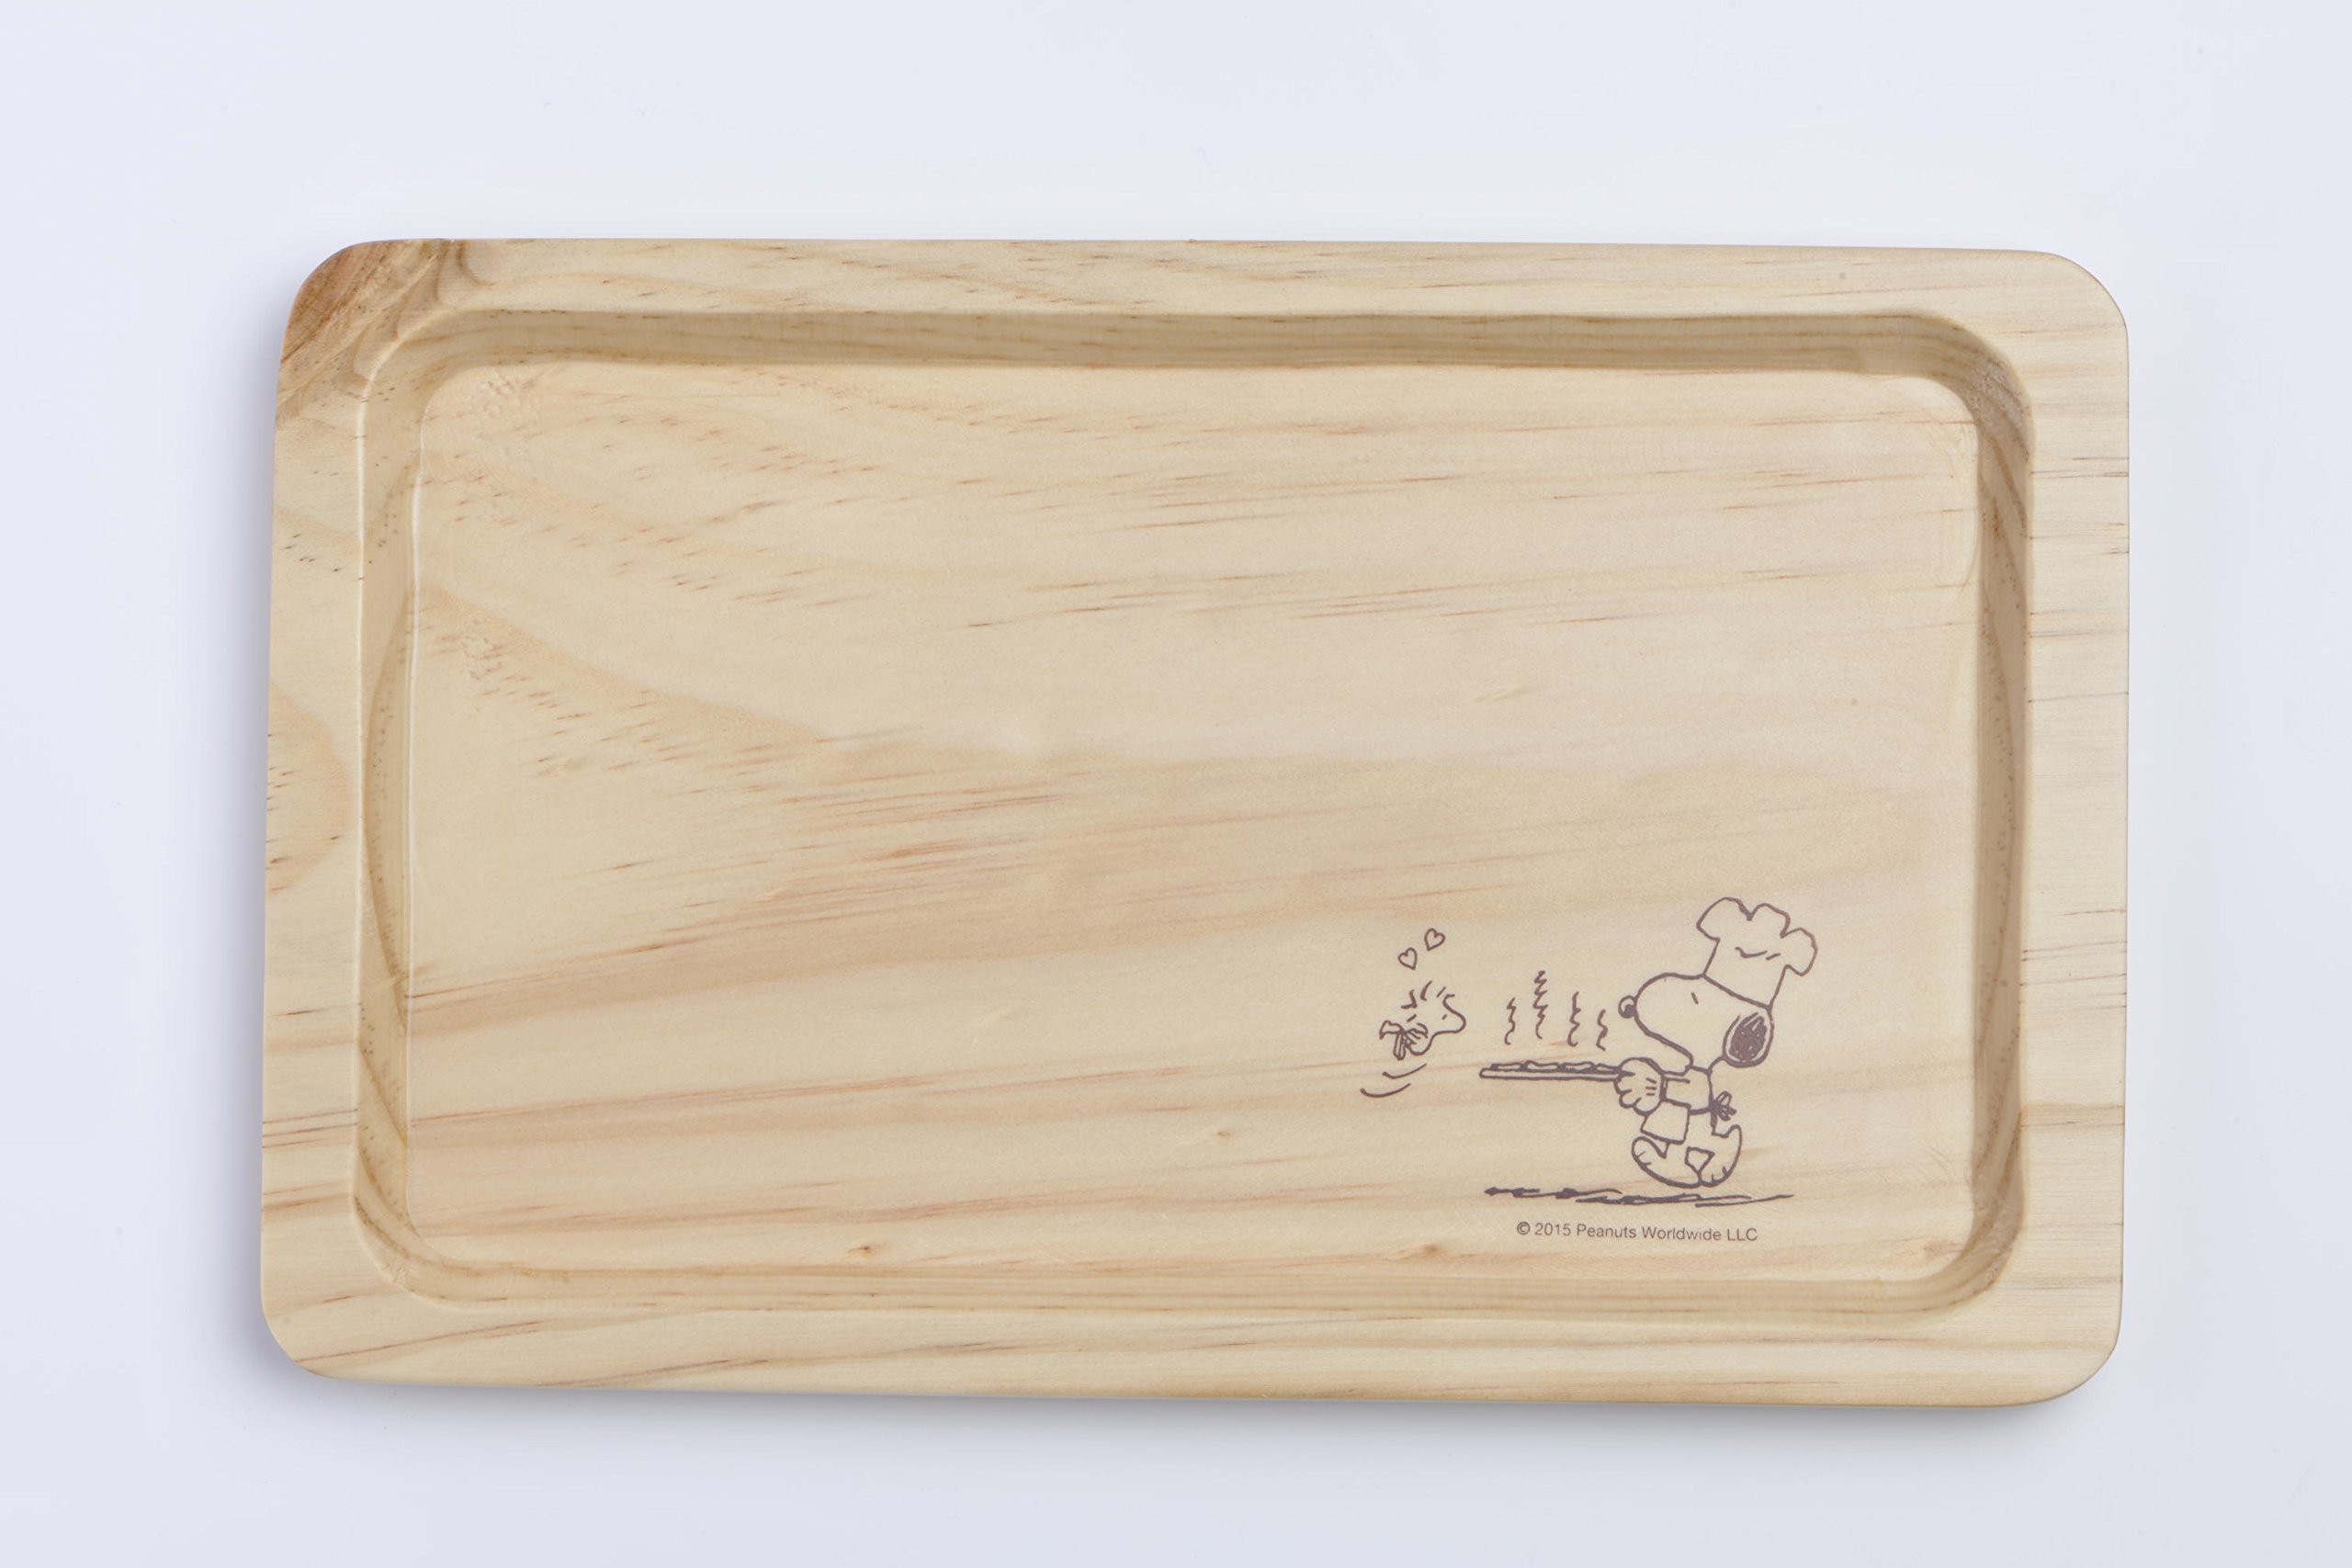 Snoopyのカフェスイーツbook 付録 カフェトレイとして使える Snoopyの木製トレイ 雑誌付録ダイアリー 発売予定 レビューブログ